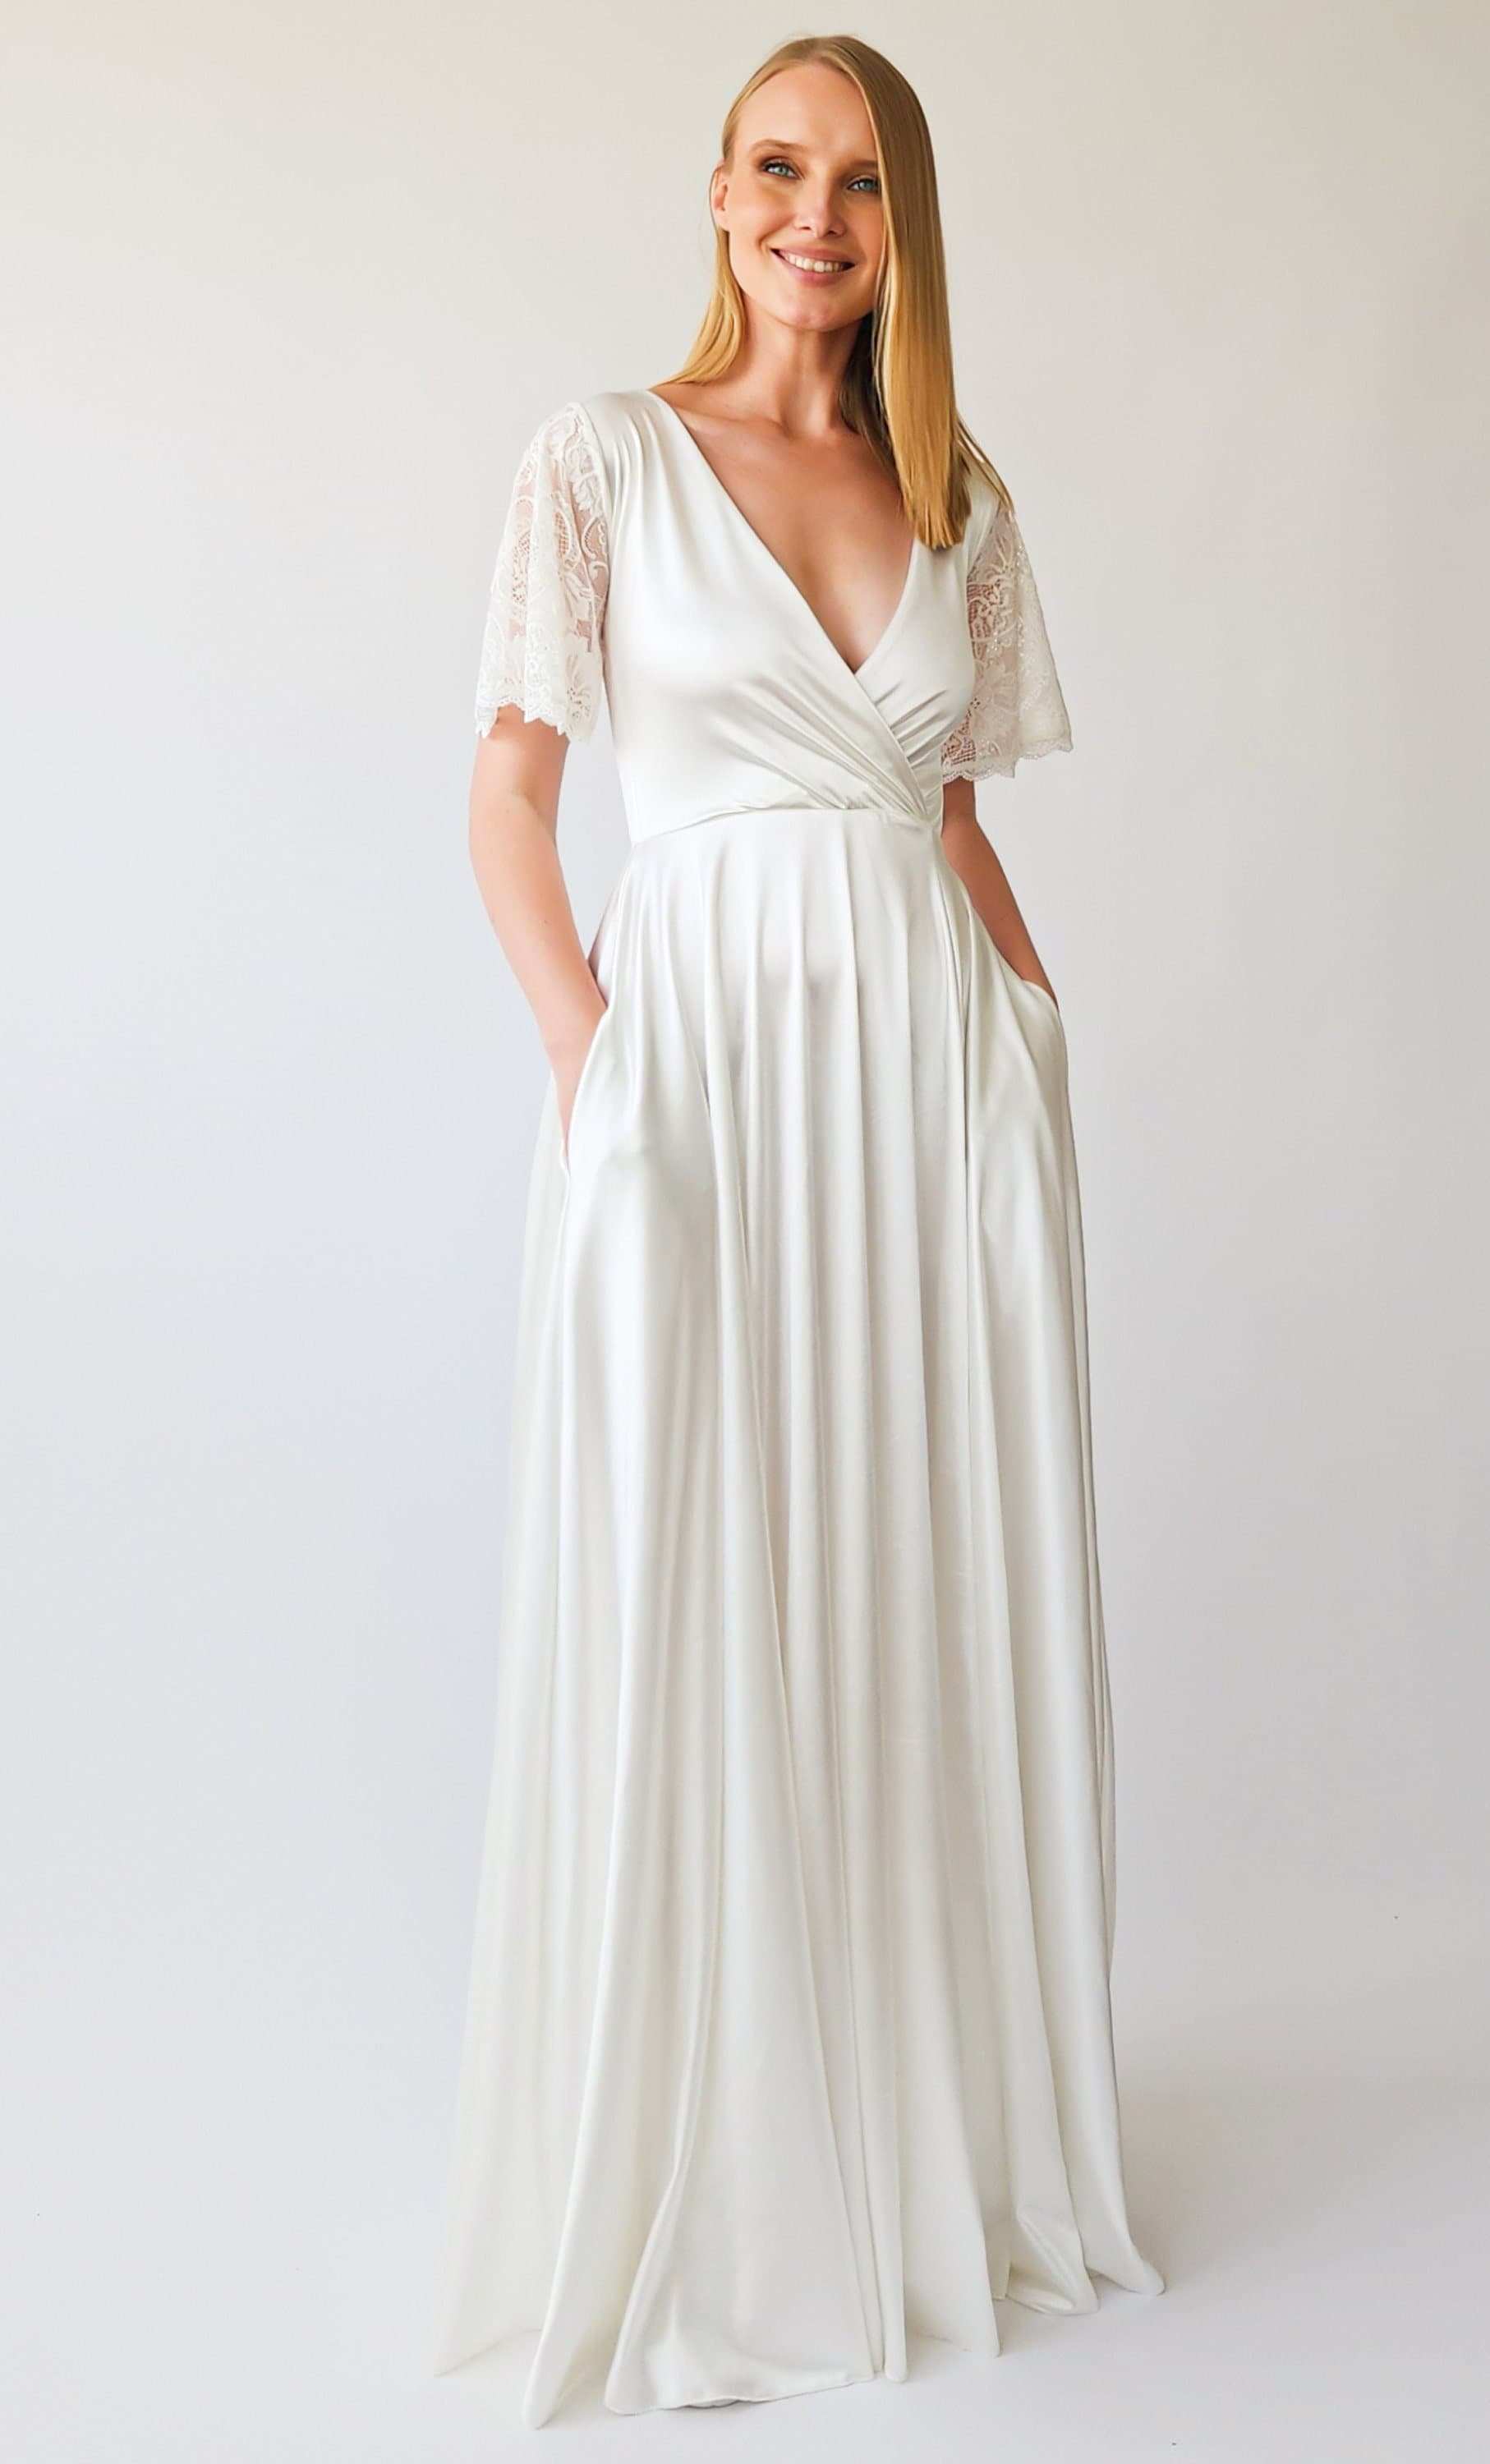 Princess Short Sleeve Wedding Dresses for sale | eBay